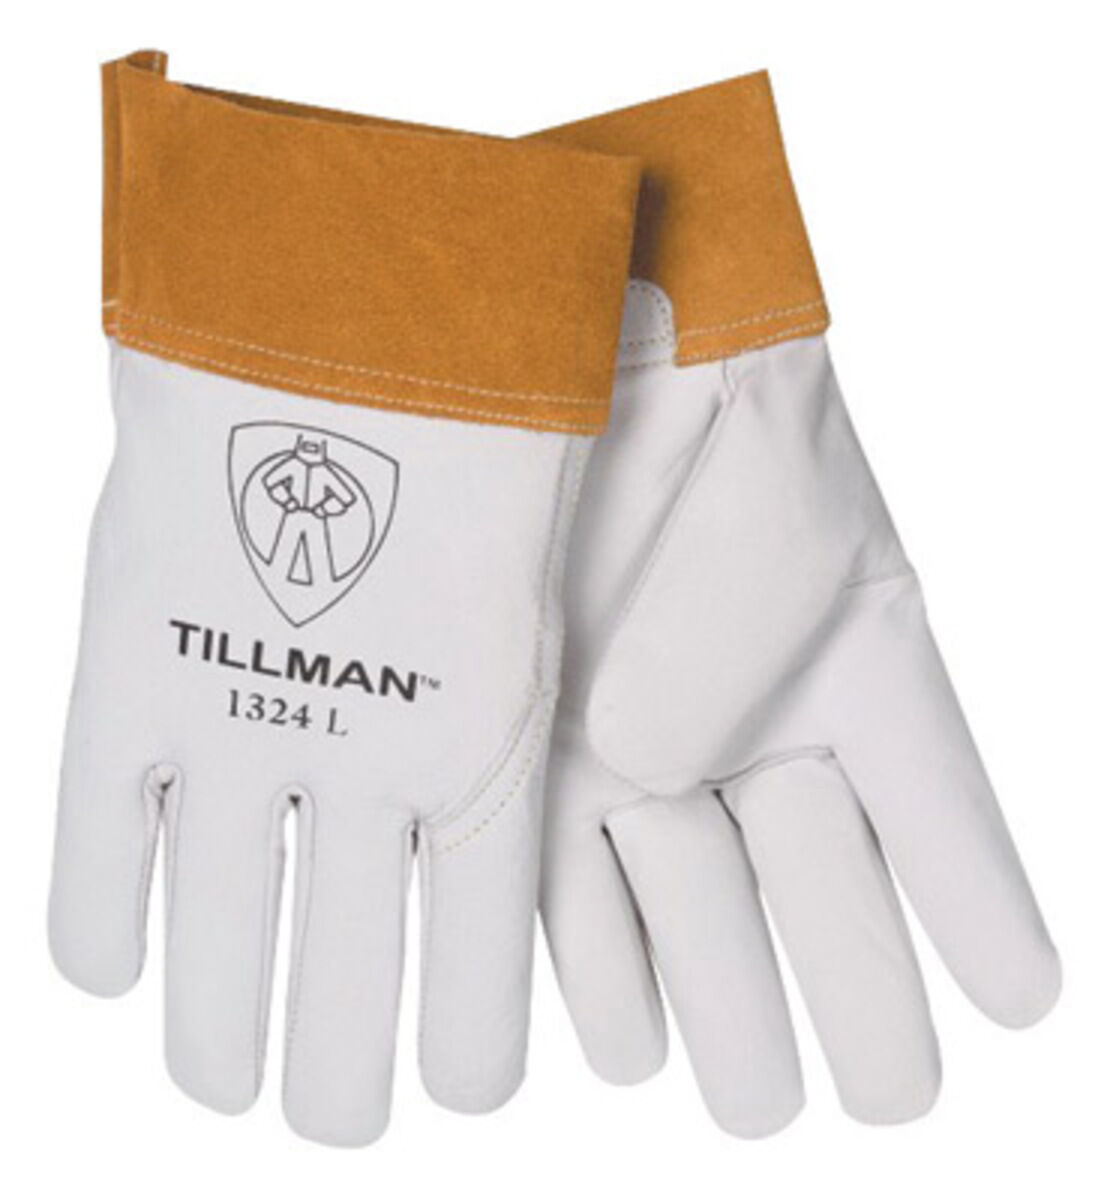 Tillman 1324 2" Cuff Welding Kidskin Goatskin Leather Tig Gloves S Med Lg Xl